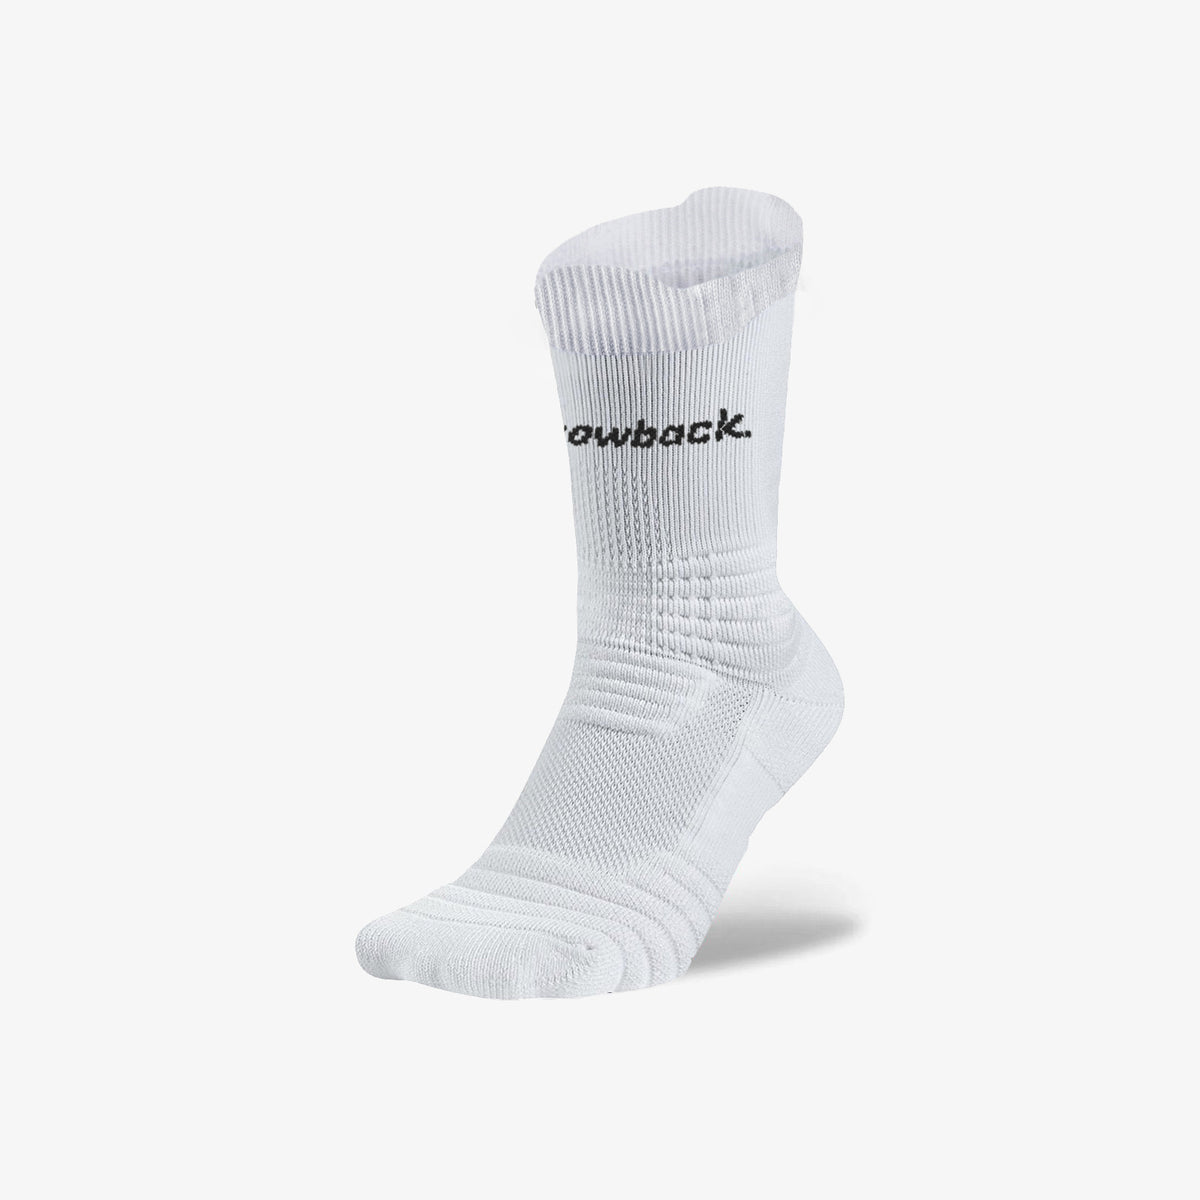 Throwback Cushion Crew Socks - White/Black